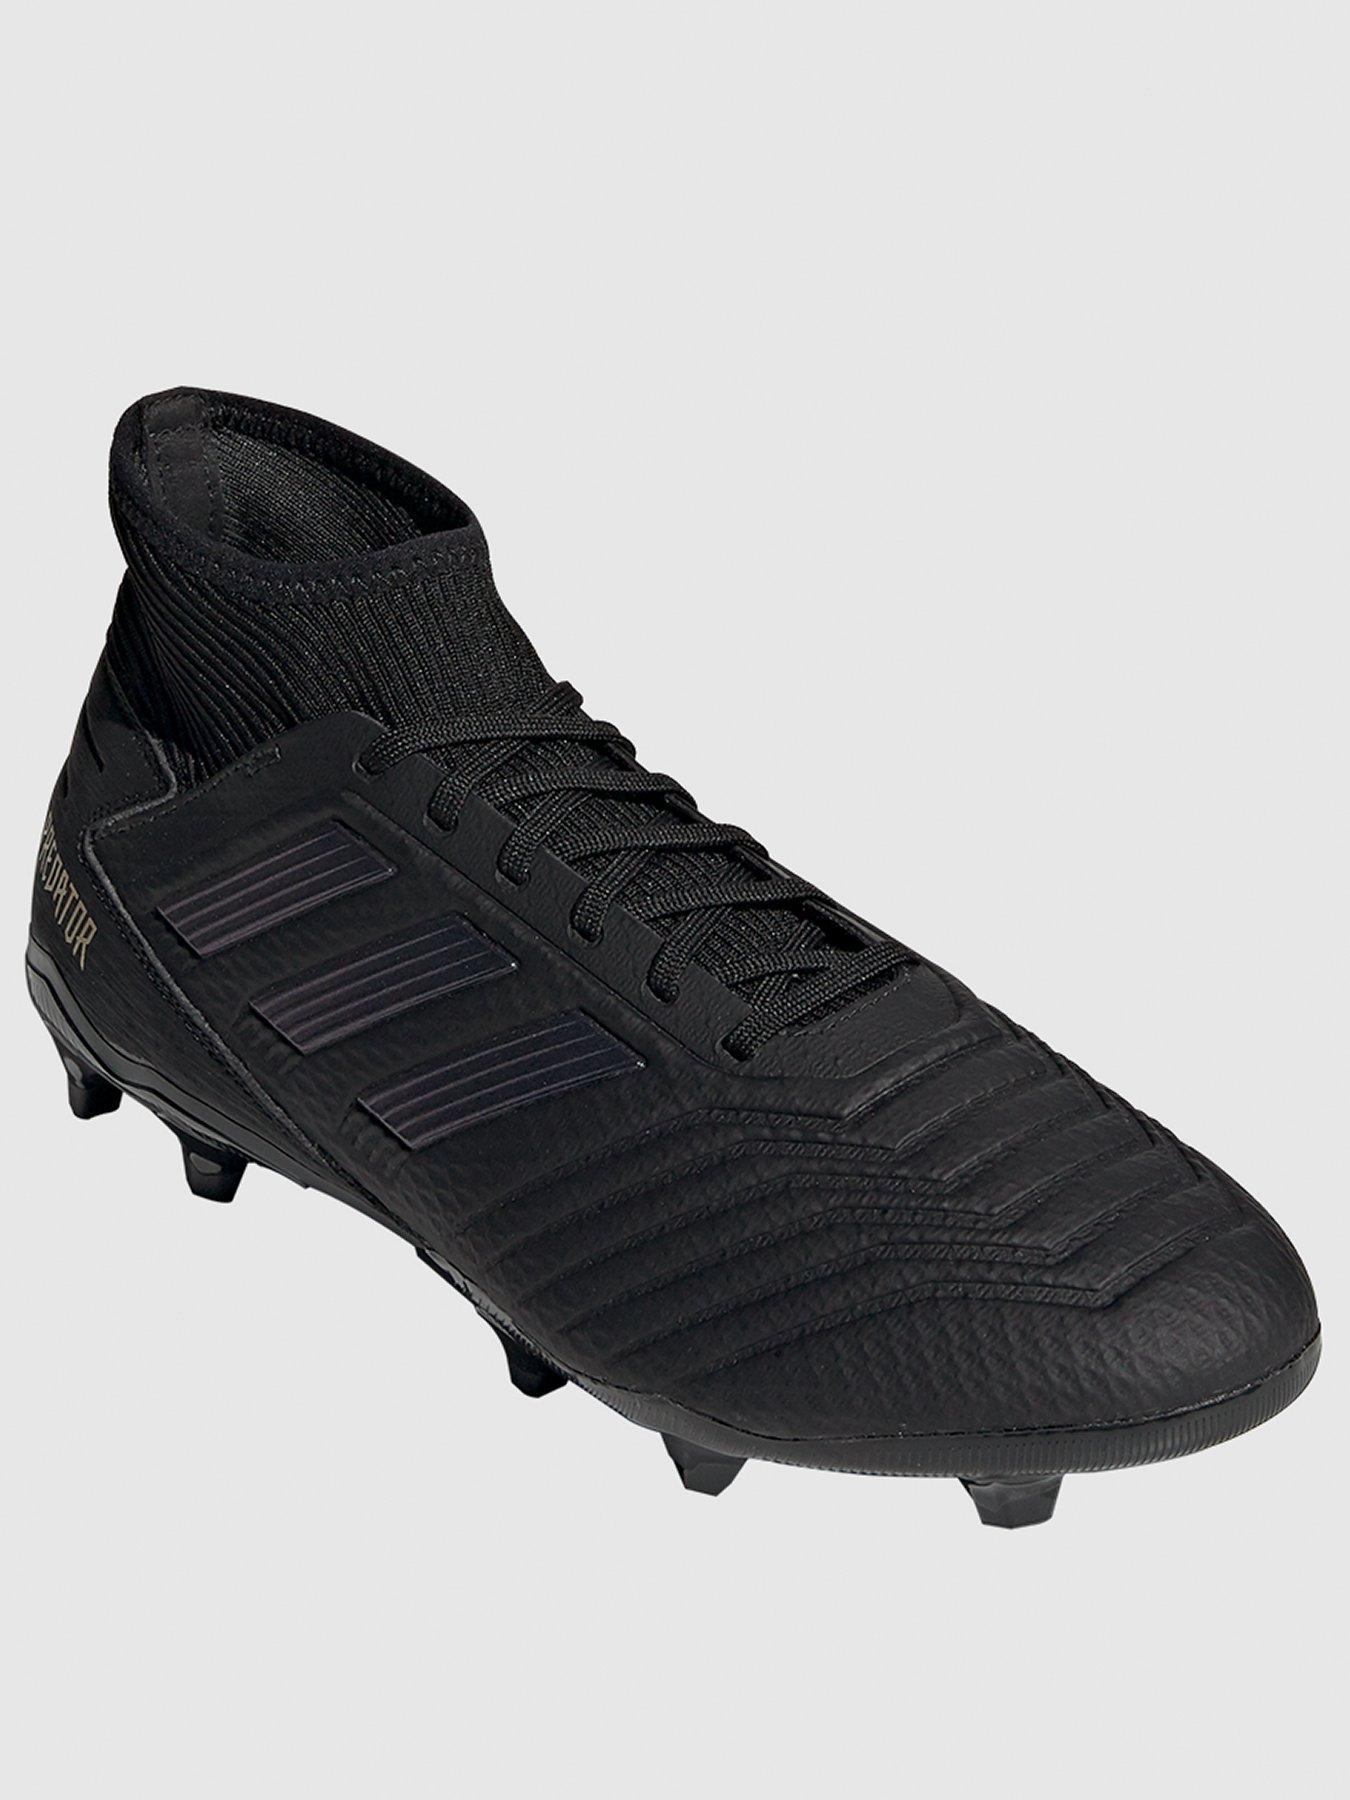 Adidas Predator 19 3 Firm Ground Football Boot Black